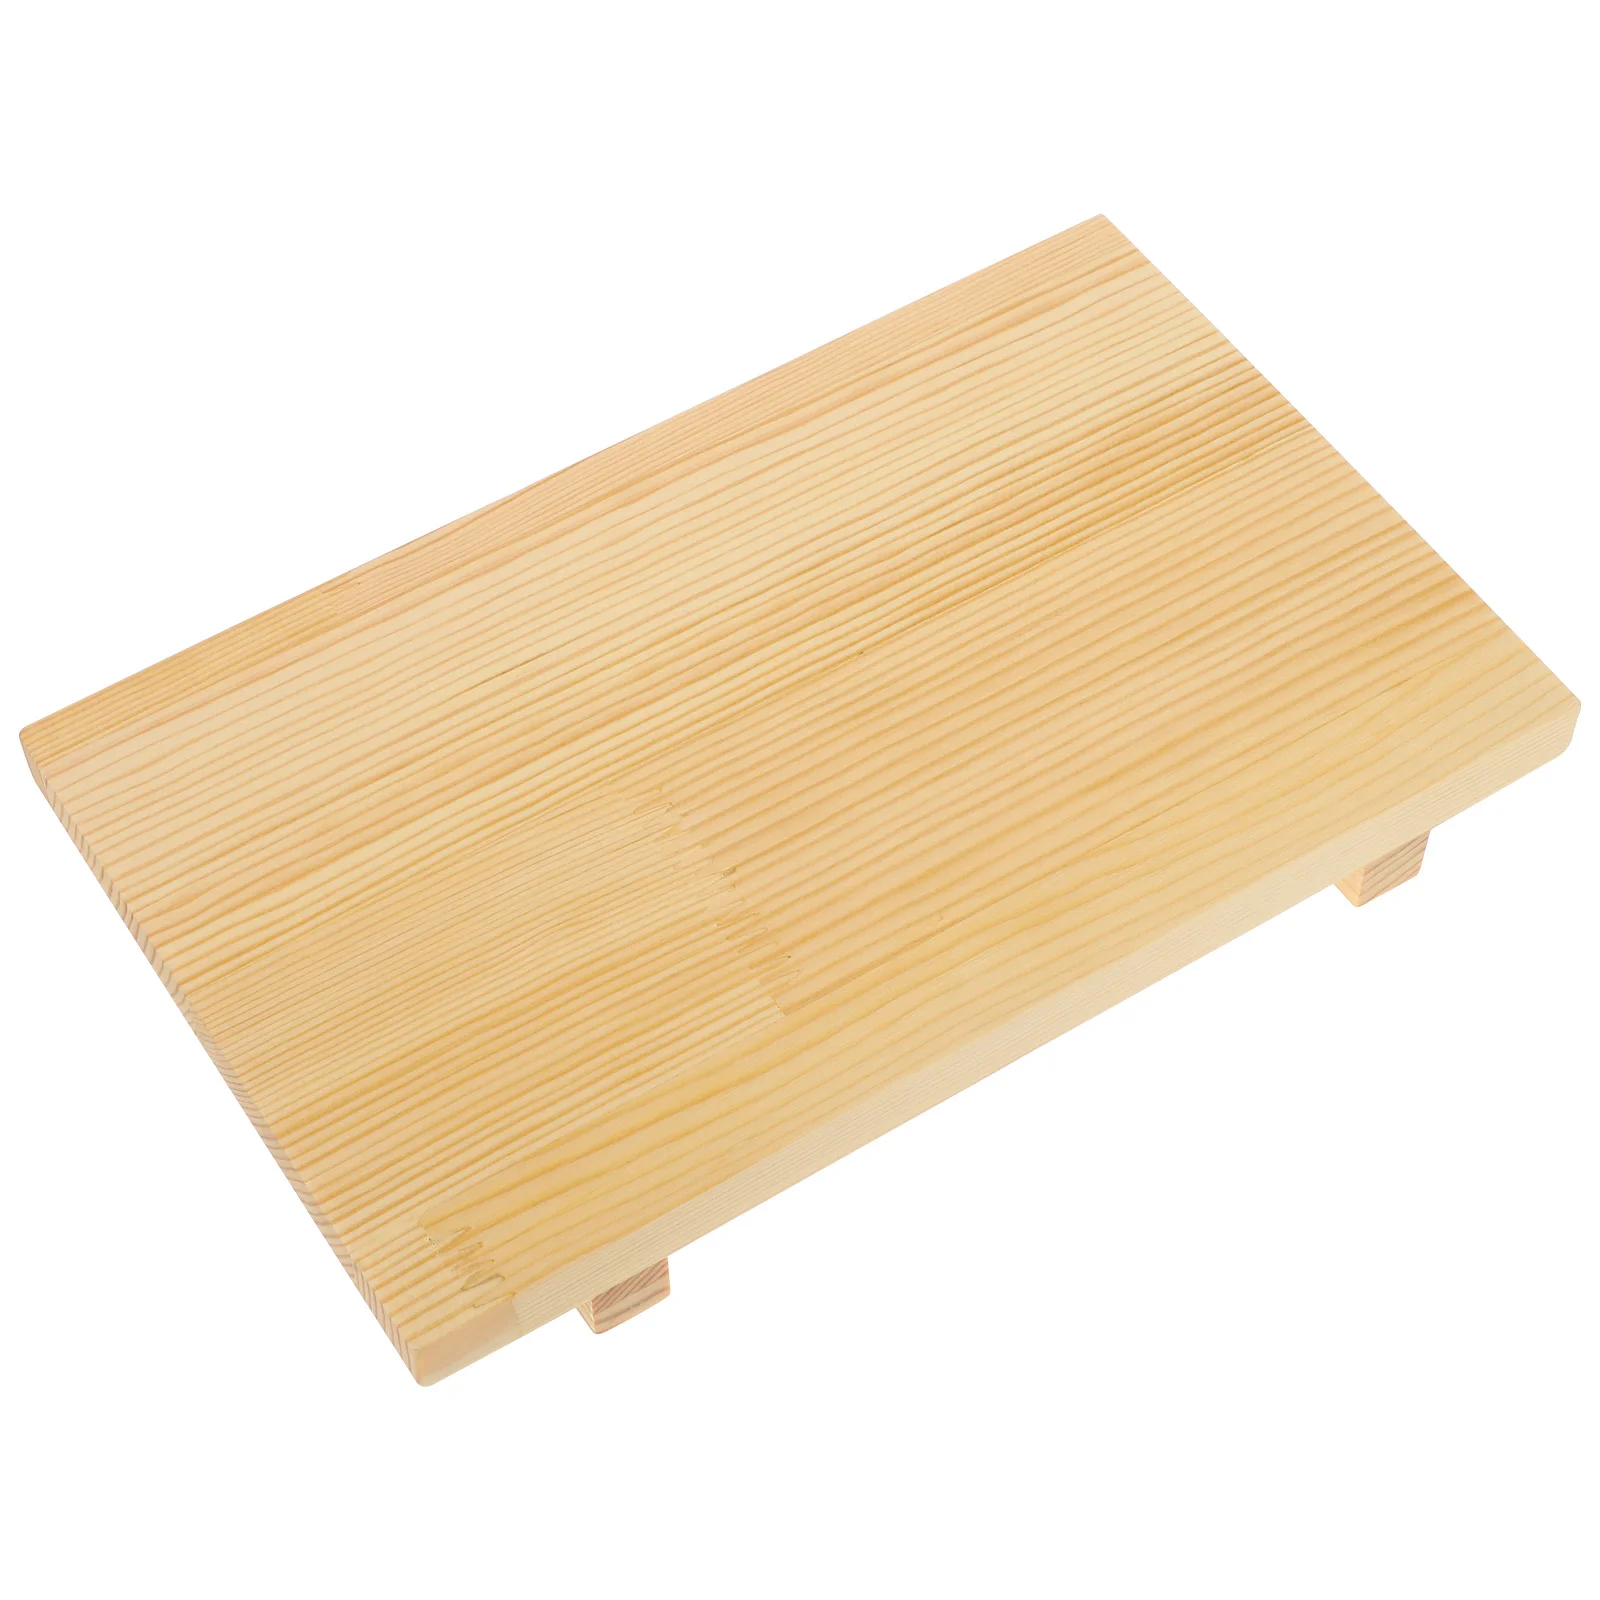 https://ae01.alicdn.com/kf/Sc41d870ec55a451797309467d24f0a748/Sushi-Serving-Plate-Tray-Board-Plates-Platter-Sashimi-Japanese-Wood-Food-Wooden-Geta-Bamboo-Cheese-Boat.jpg